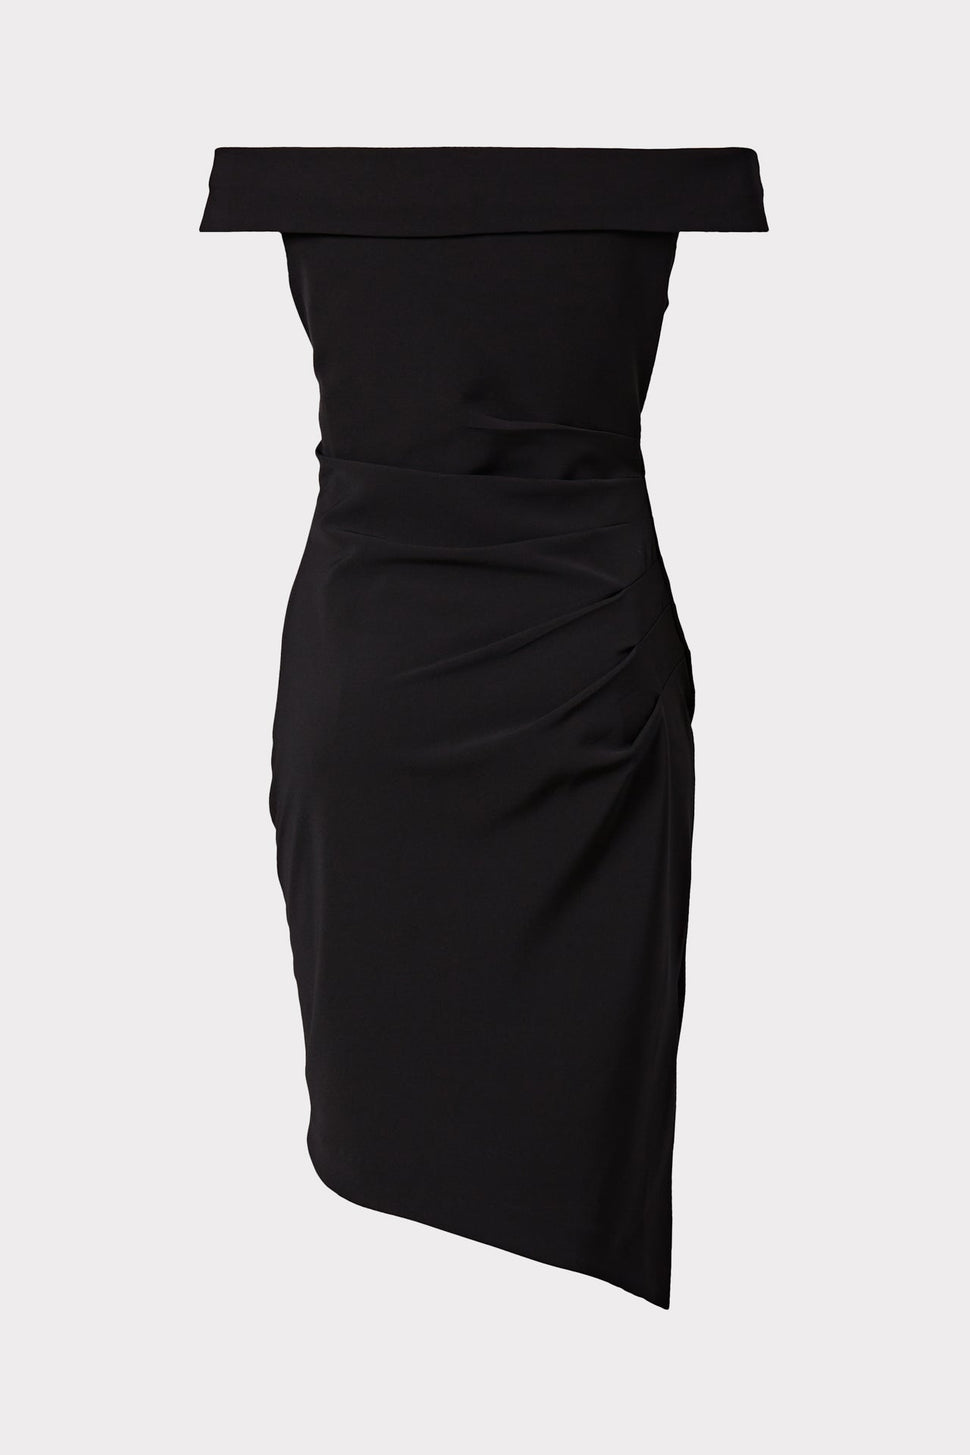 Women's Black Cocktail Dress | MILLY